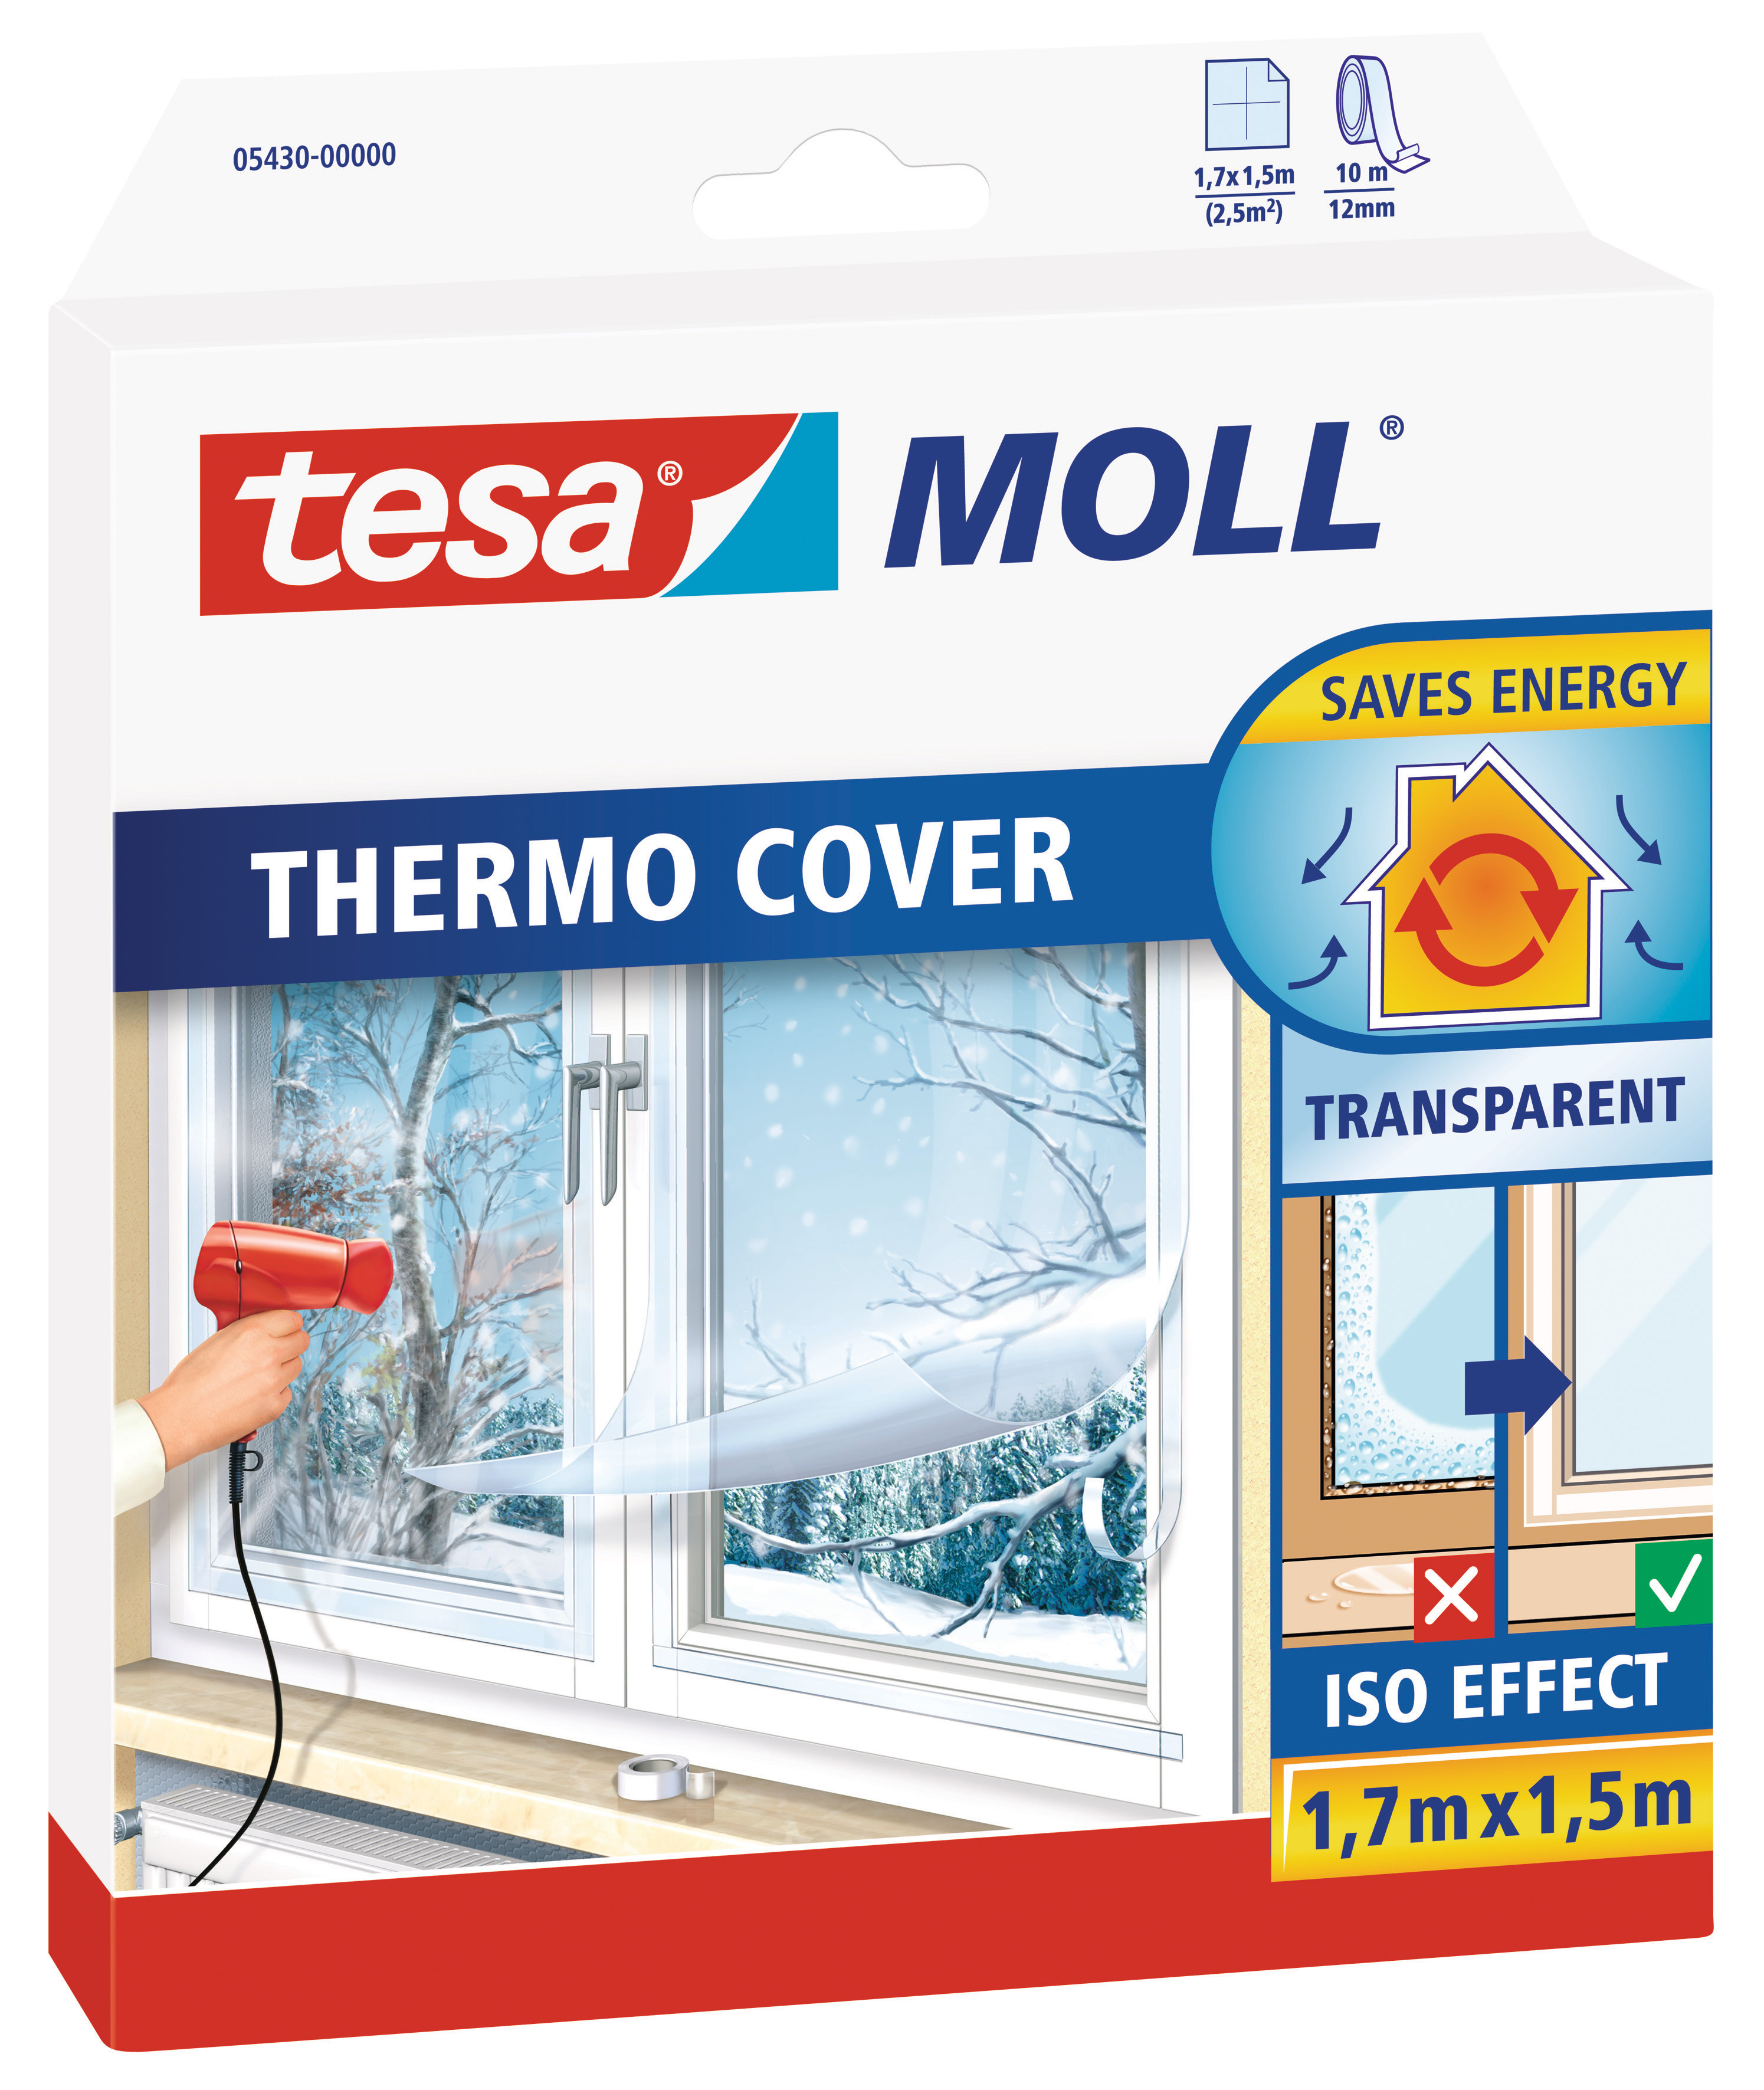 TESA tesamoll® Thermo Cover Fensterisolierfolie, 1,5 m x 1,7 m